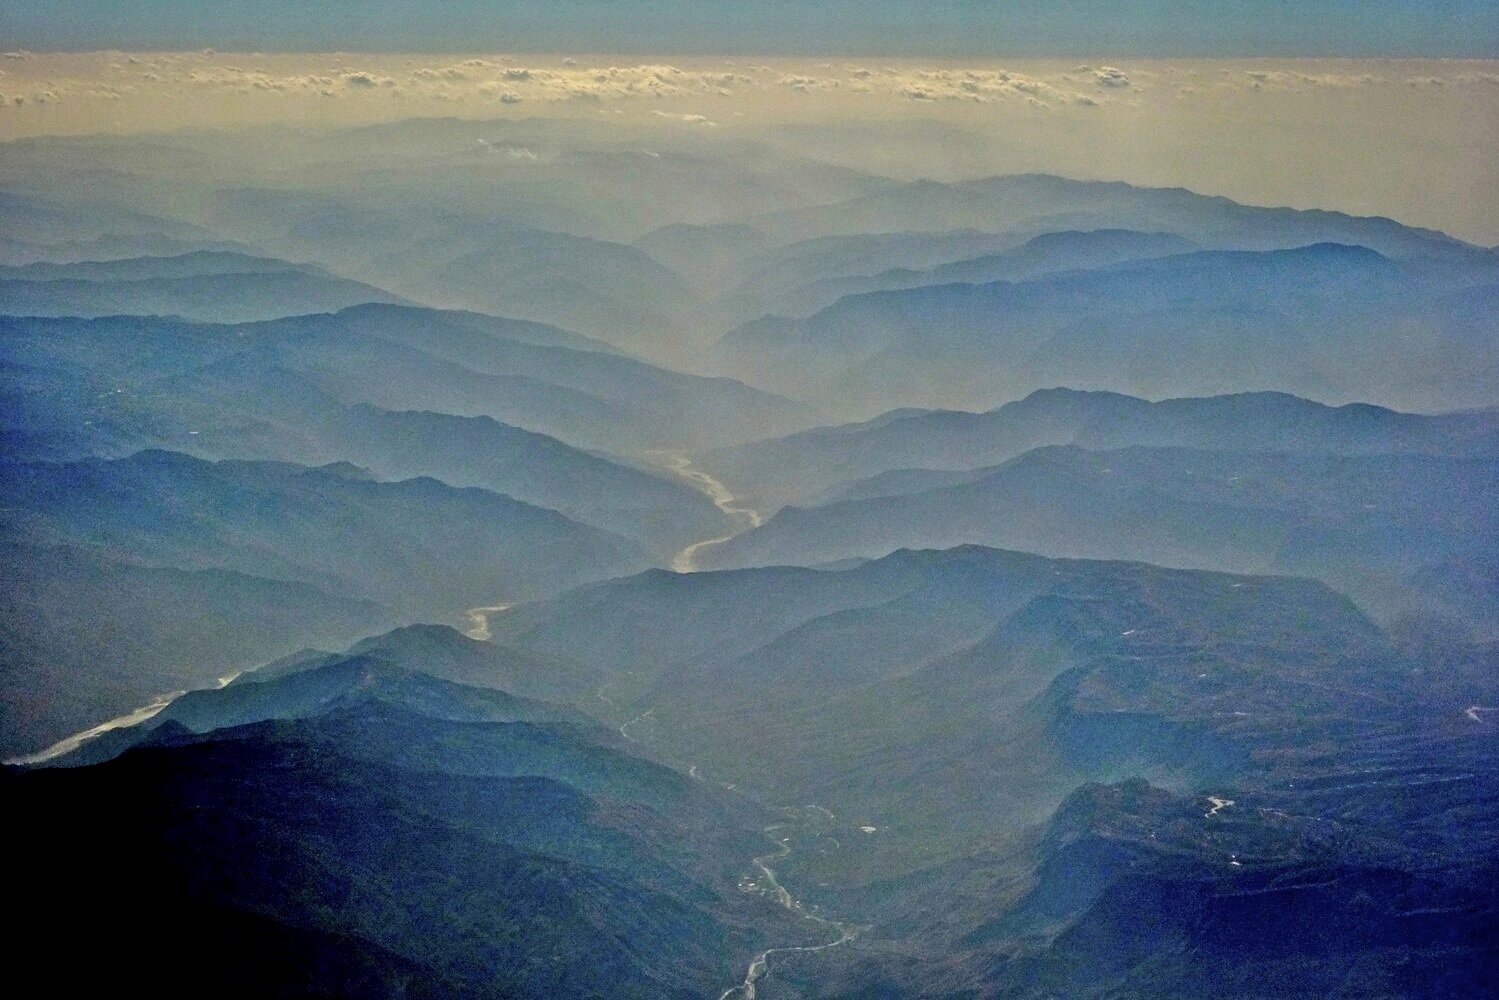 Yangtze River from a flight from Lijiang to Kunming